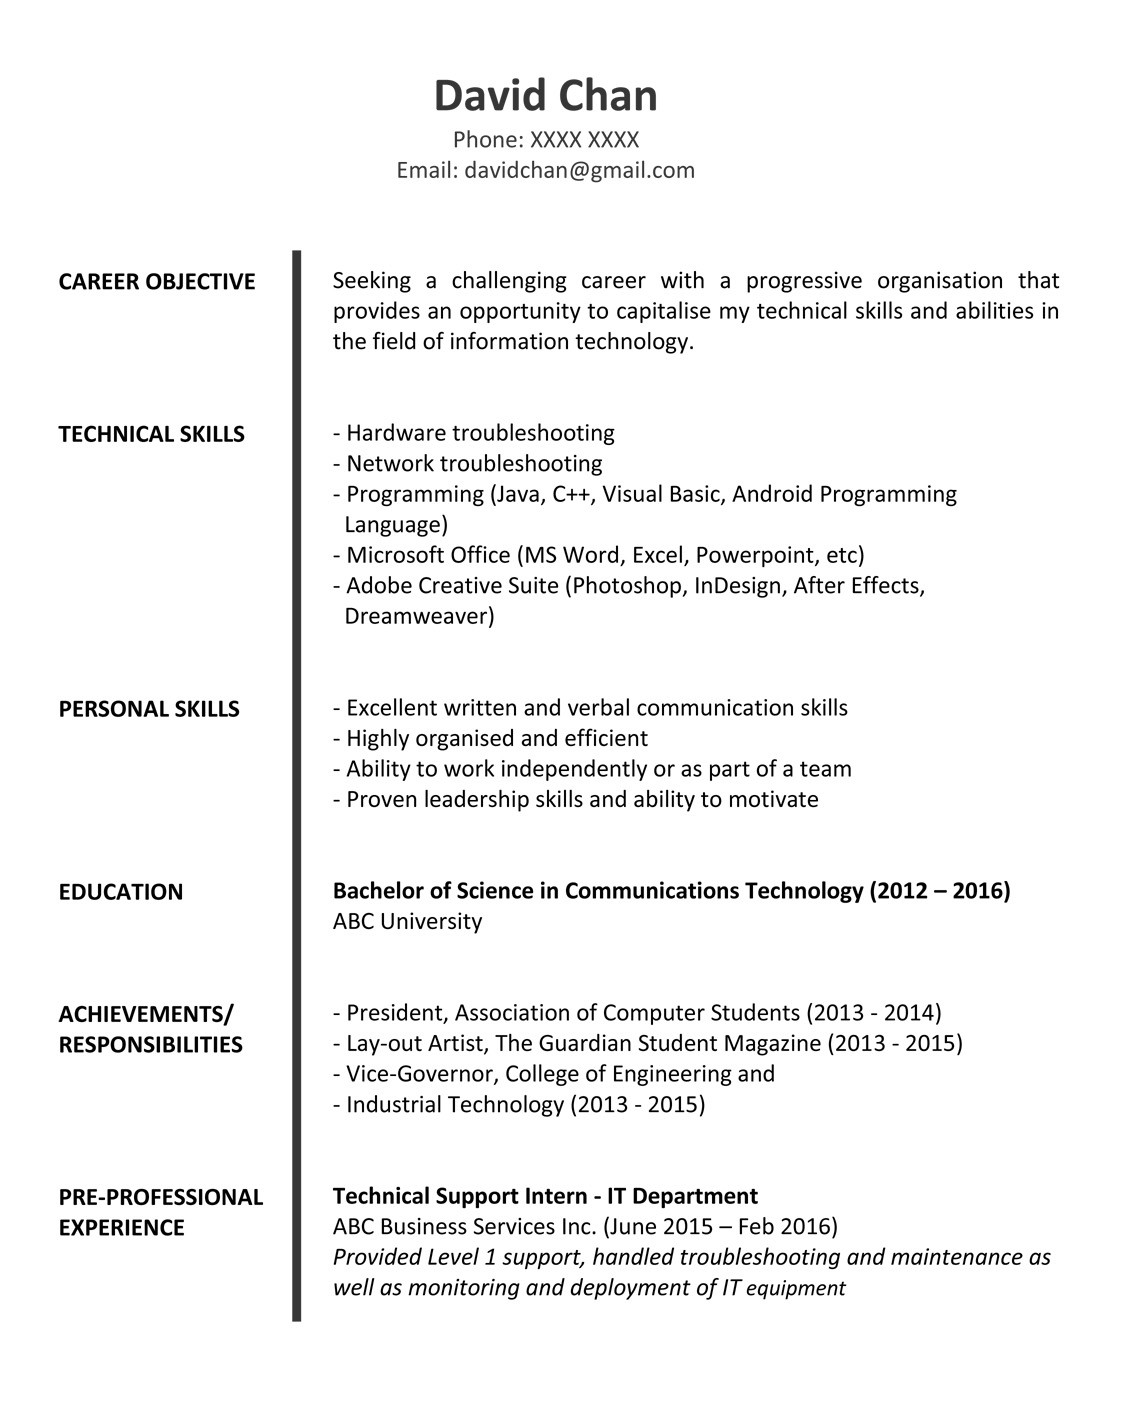 Resume Letter Sample for Fresh Graduate Information Technology Sample Resume for Fresh Graduates (it Professional) Jobsdb Hong Kong